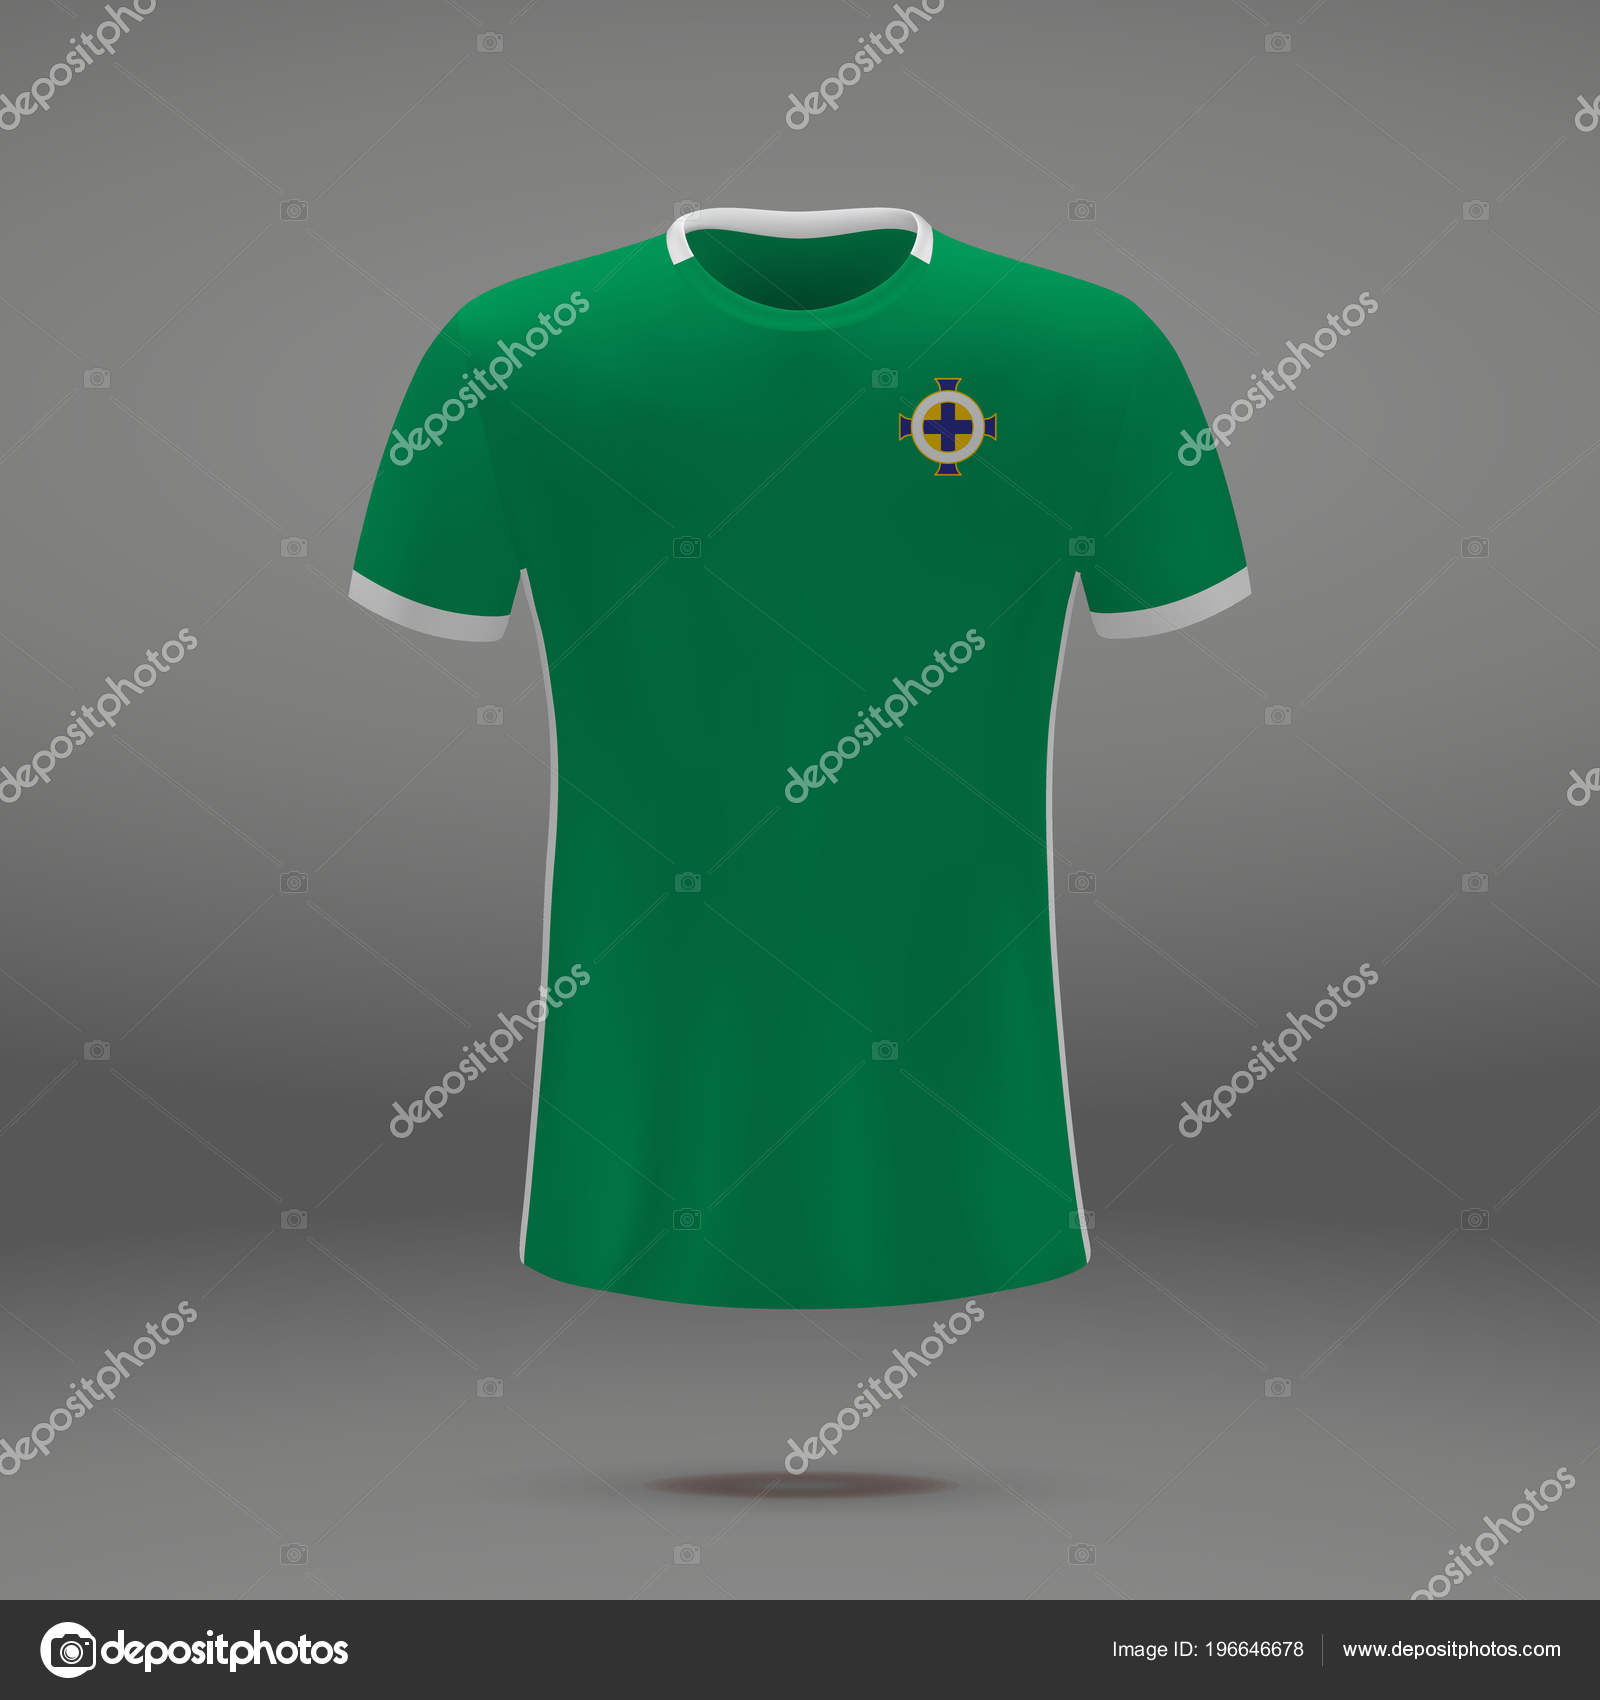 ireland soccer jersey 2018